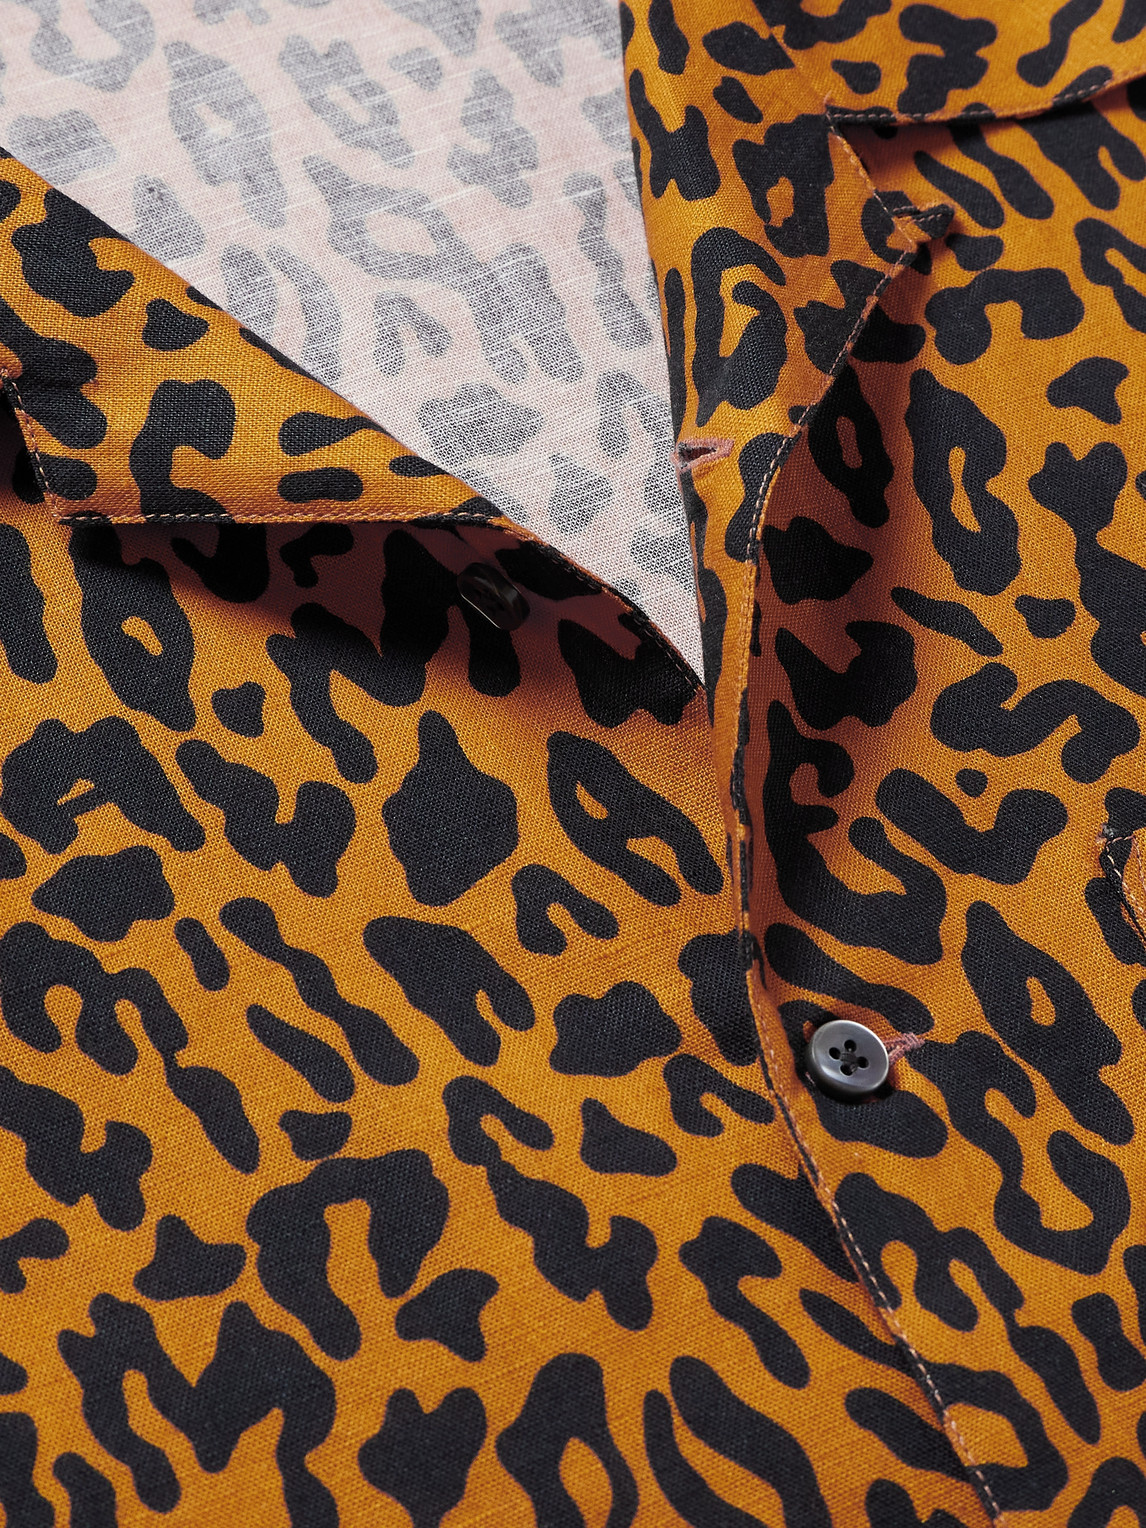 Shop Palm Angels Camp-collar Cheetah-print Linen And Cotton-blend Shirt In Orange